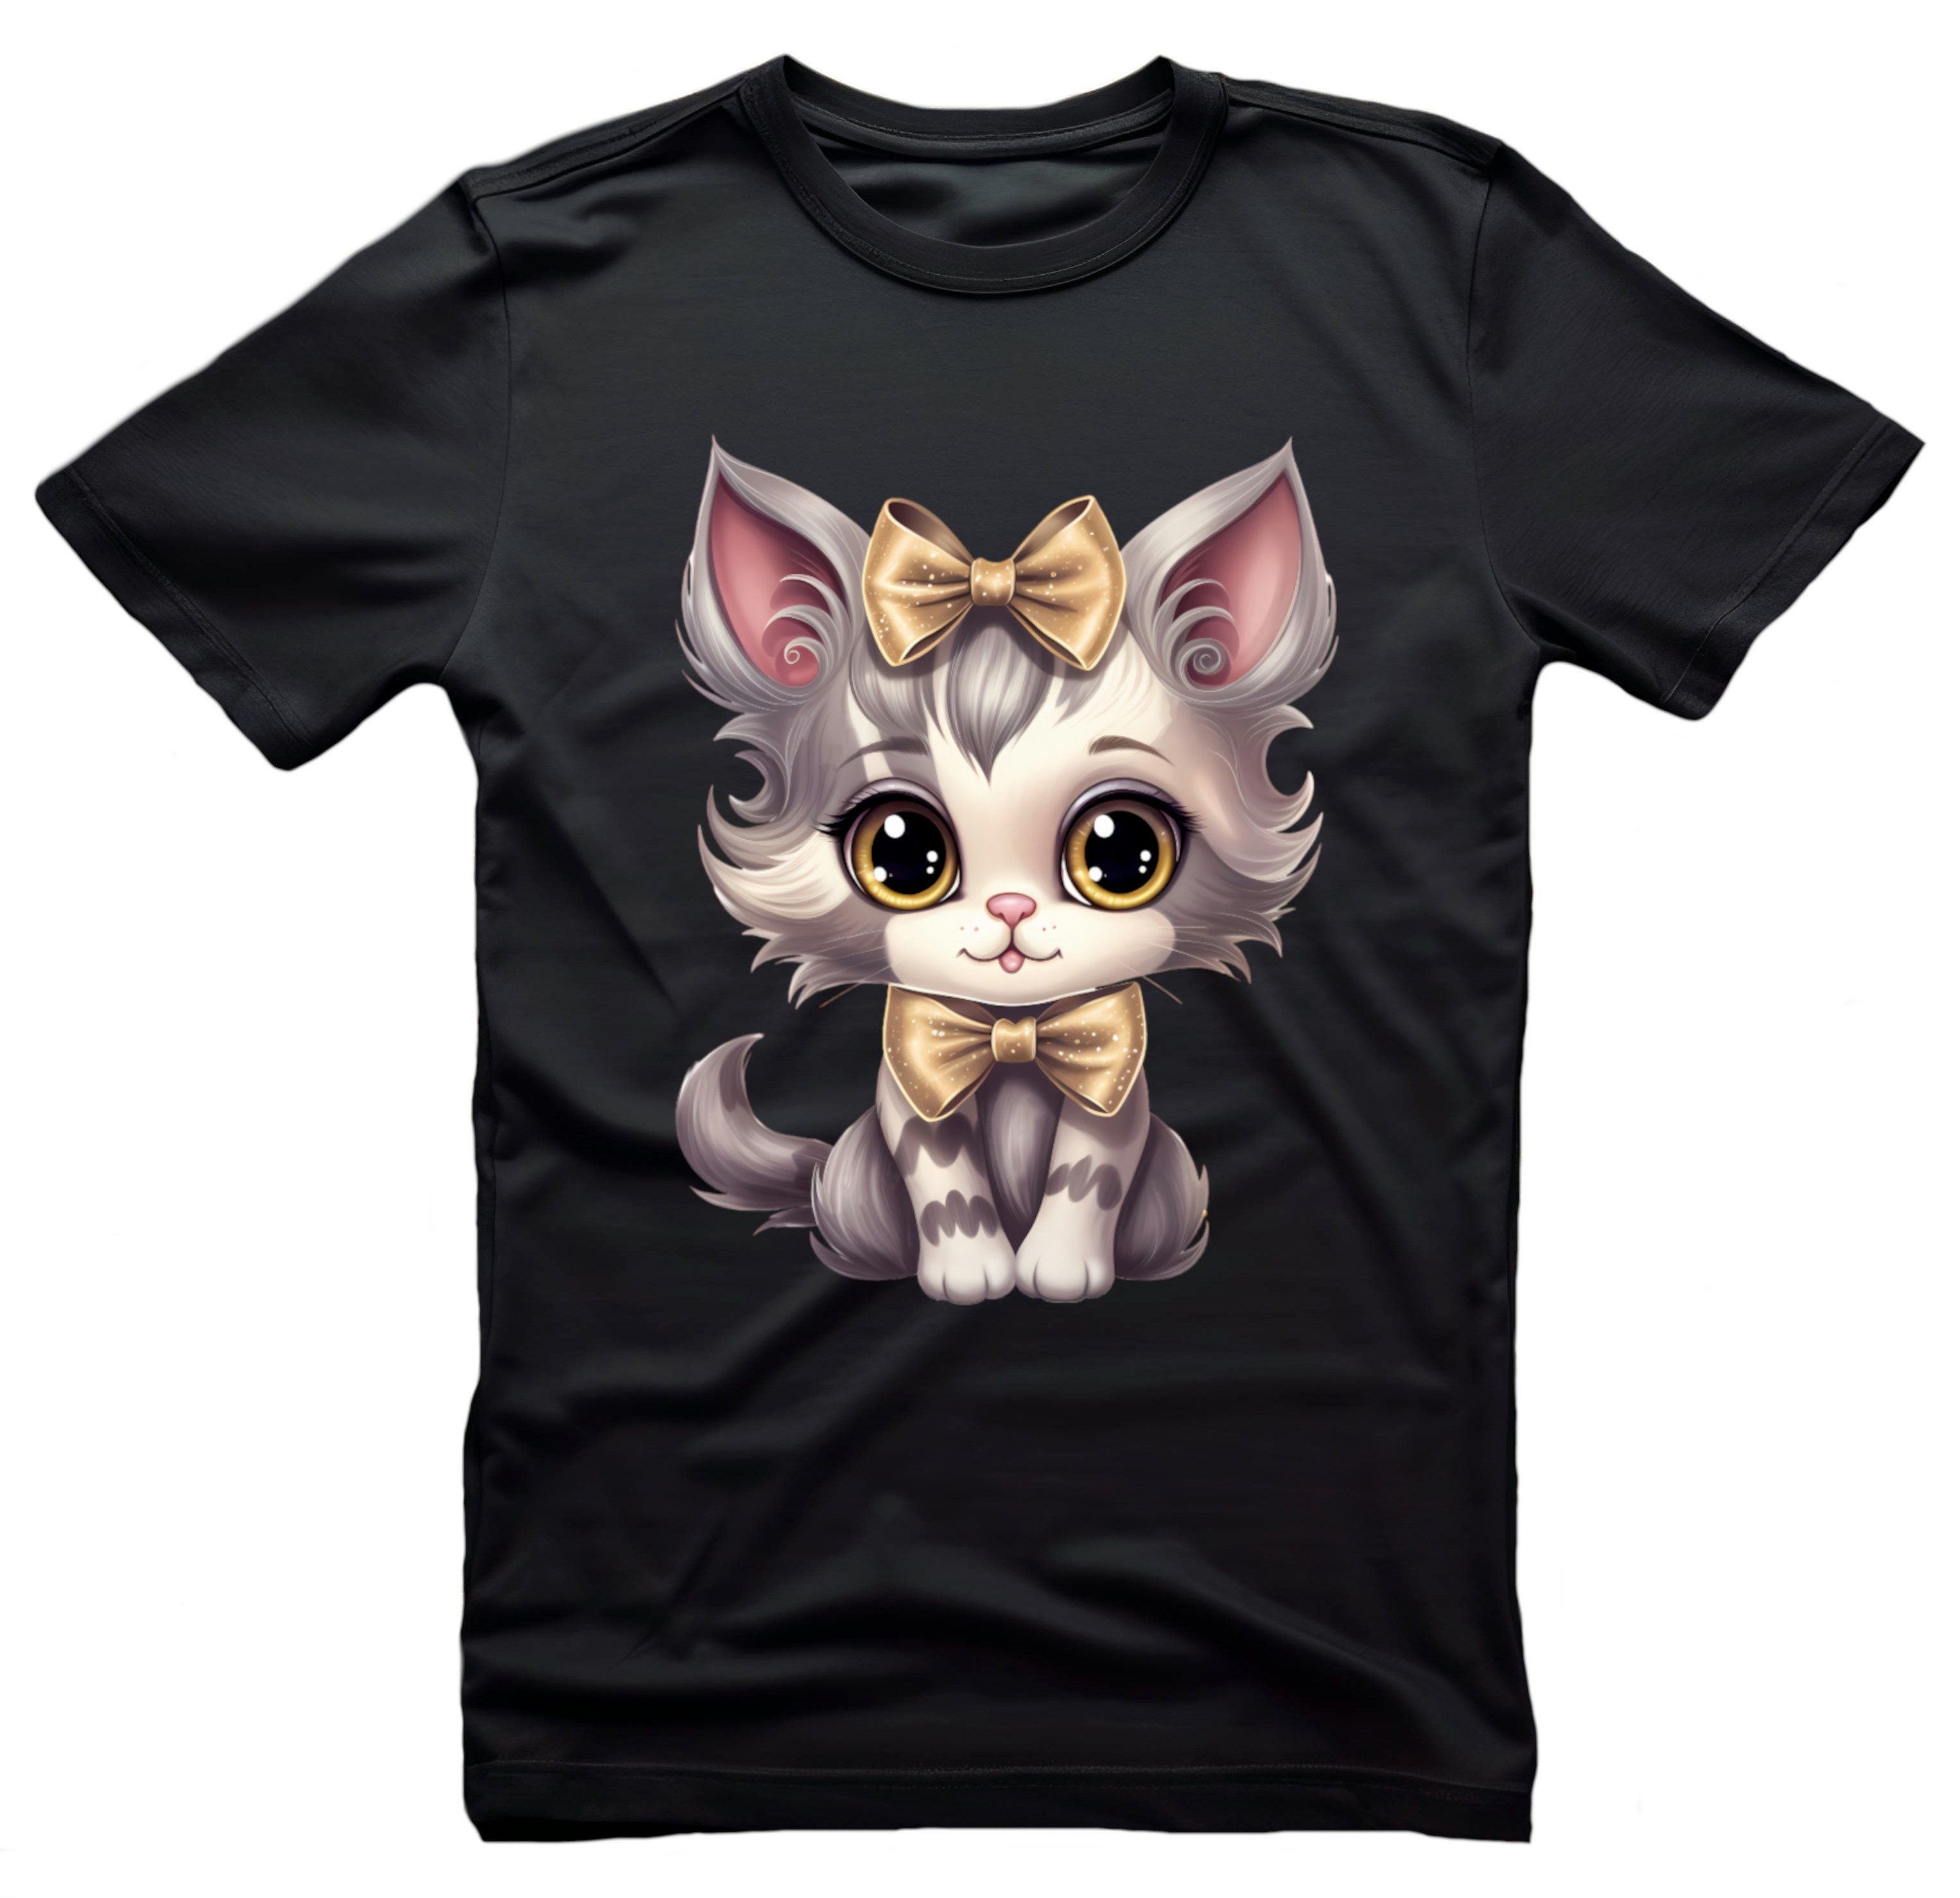 Corileo Kurzarmshirt Kinder T-Shirt Schwarz / Hellgrau mit Niedlicher Katze Kurzarm